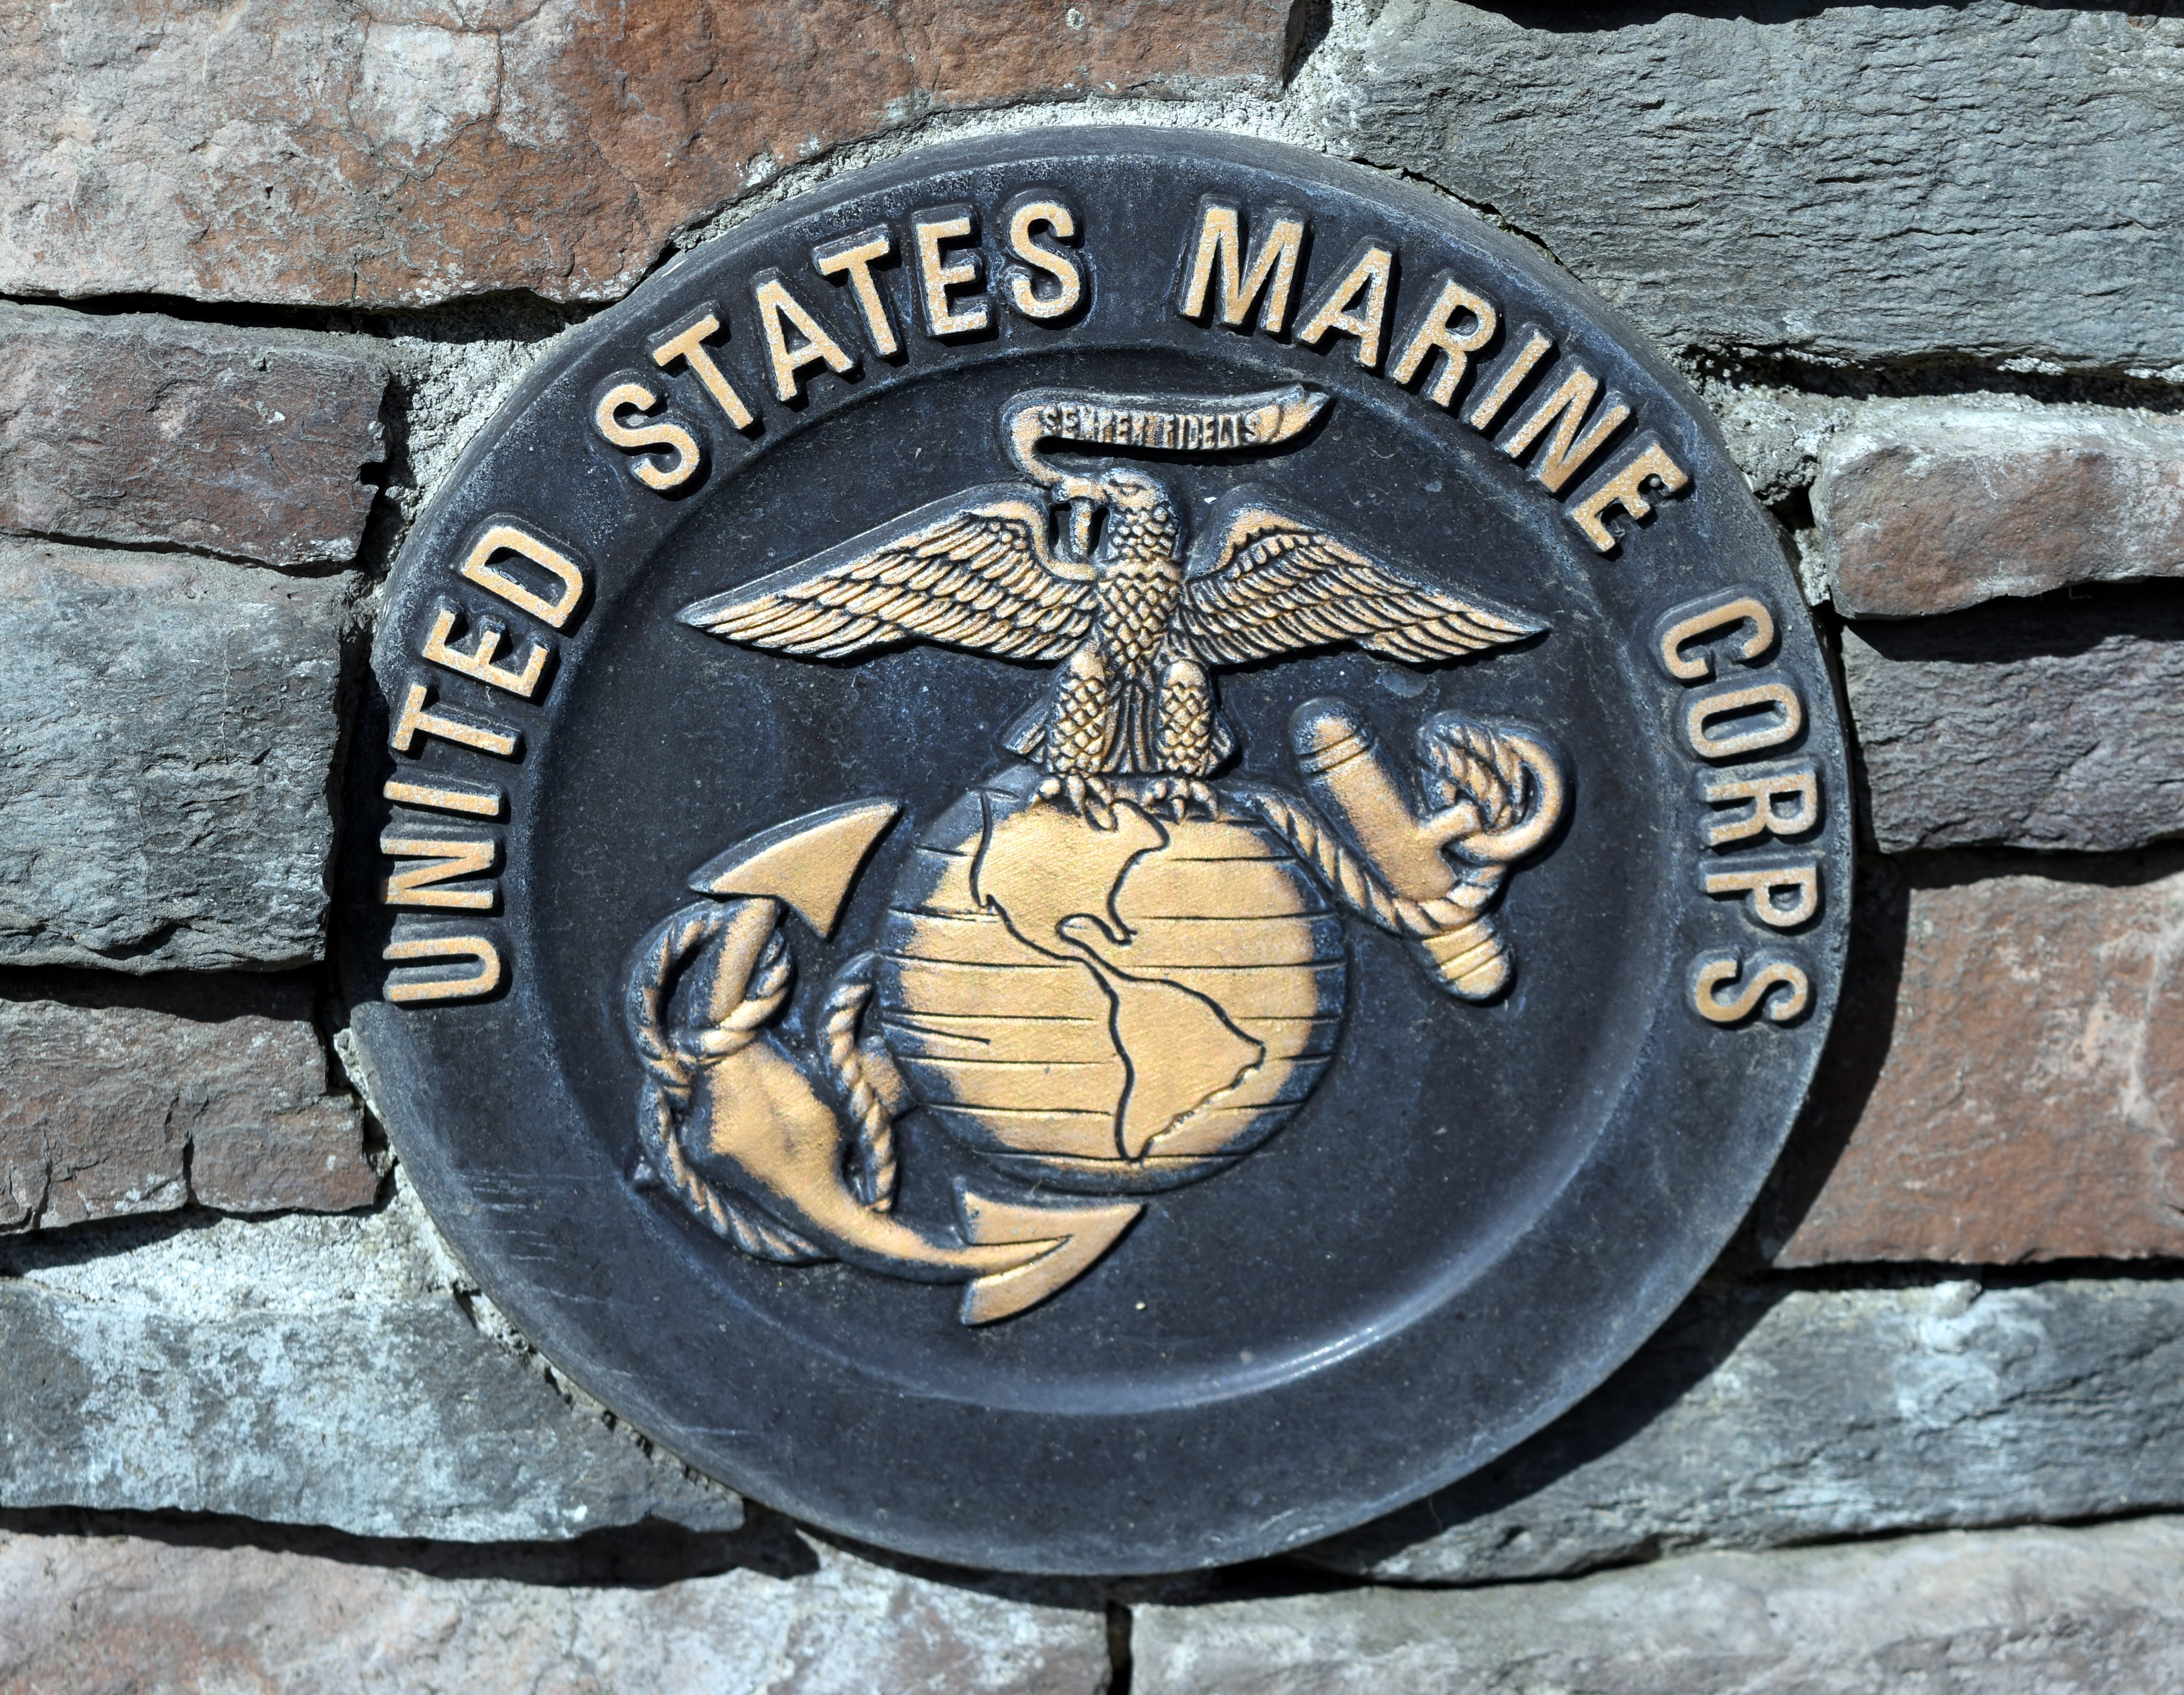 United States Marine Corps badge, Marines, Military, armed, service